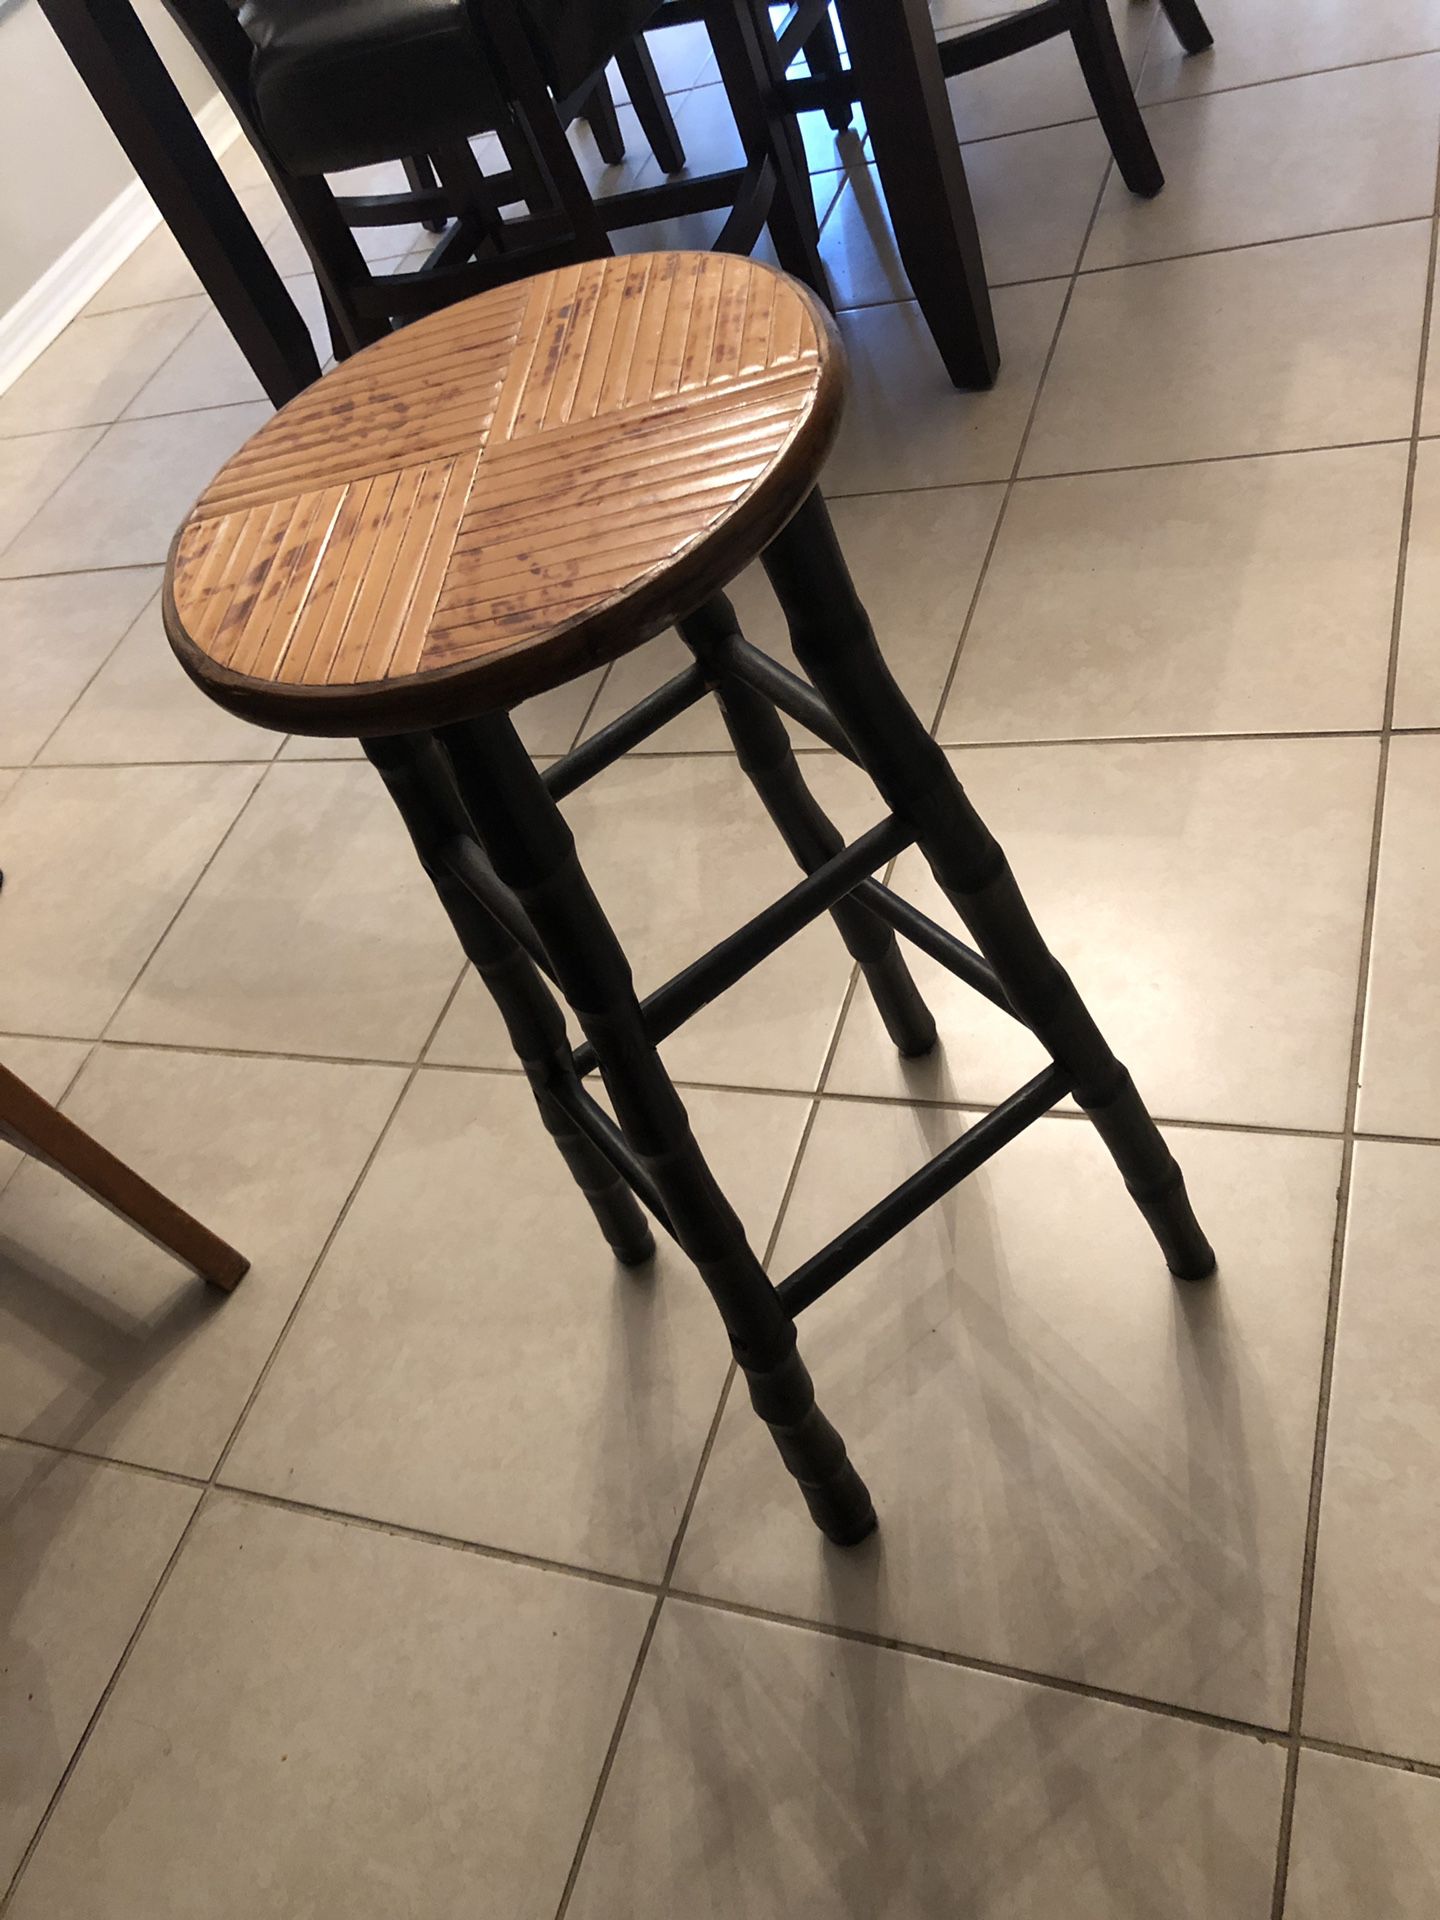 Wooden stool seat